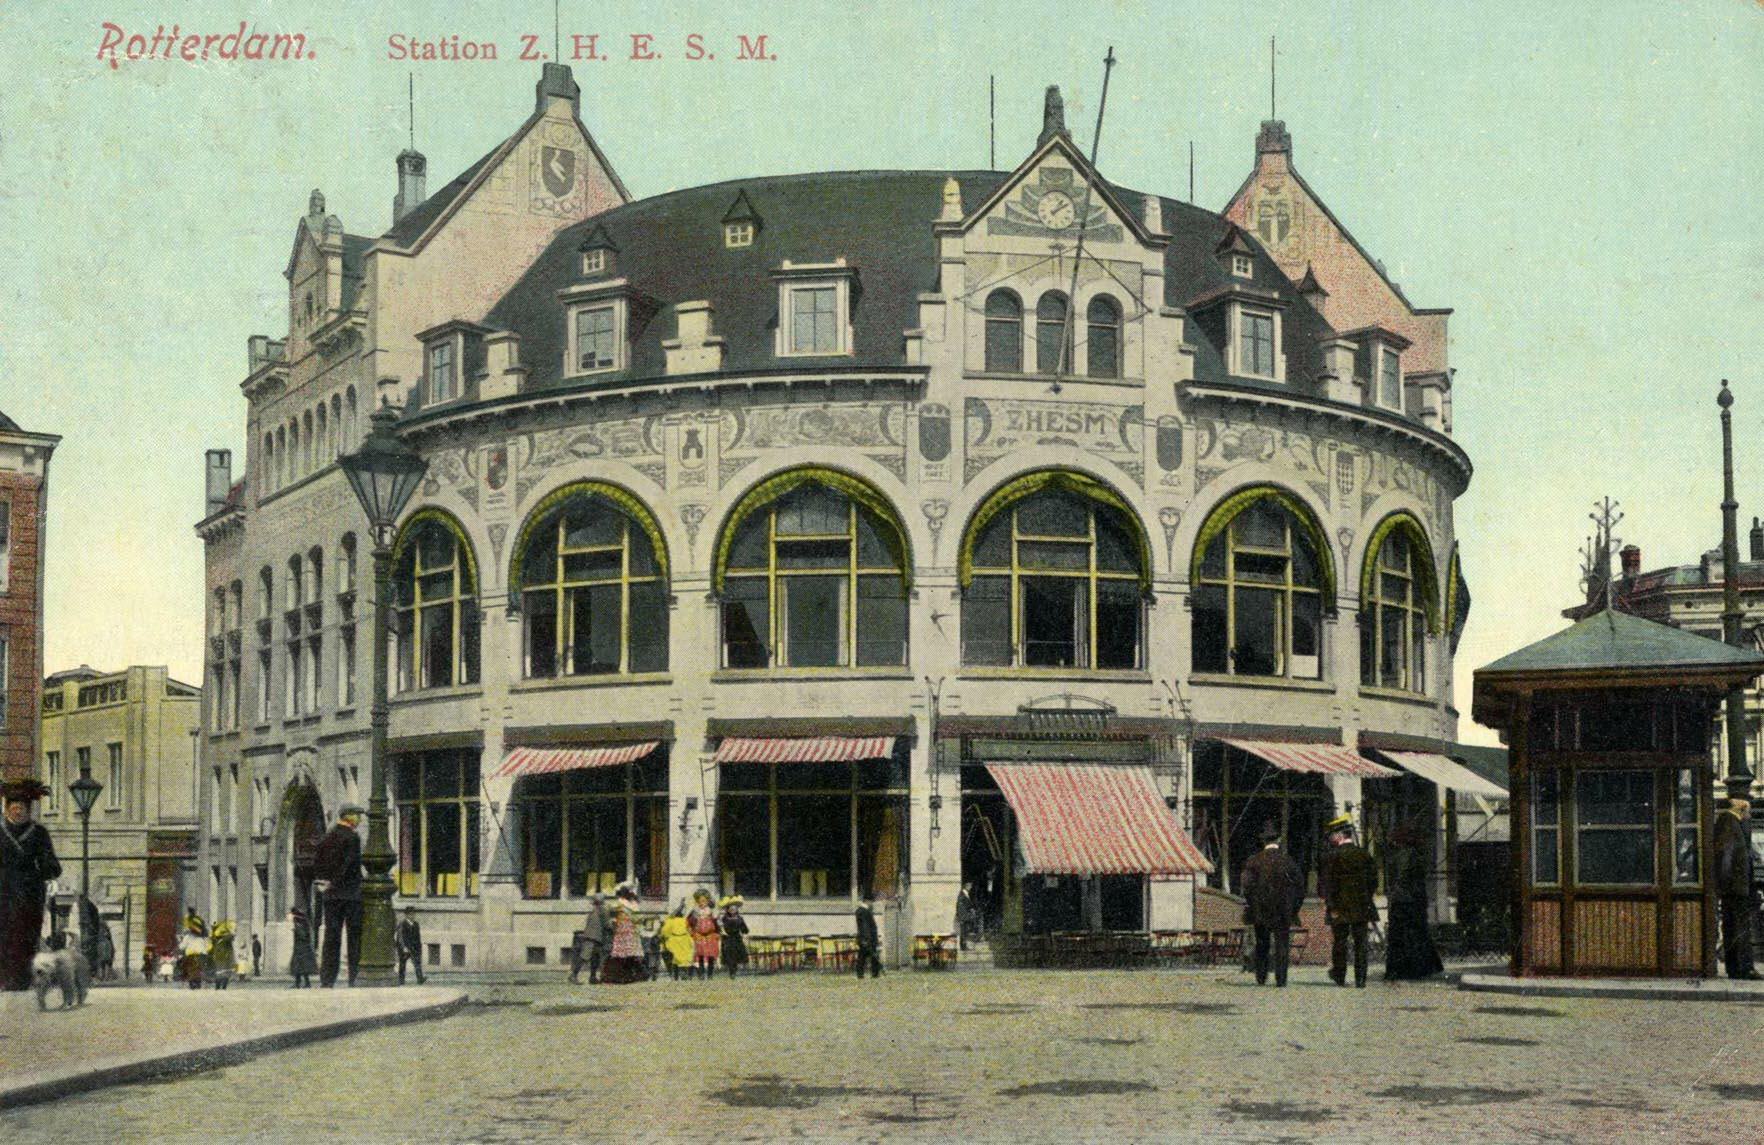 Station Hofplein, Rotterdam | Ansichtkaart, ca. 1910